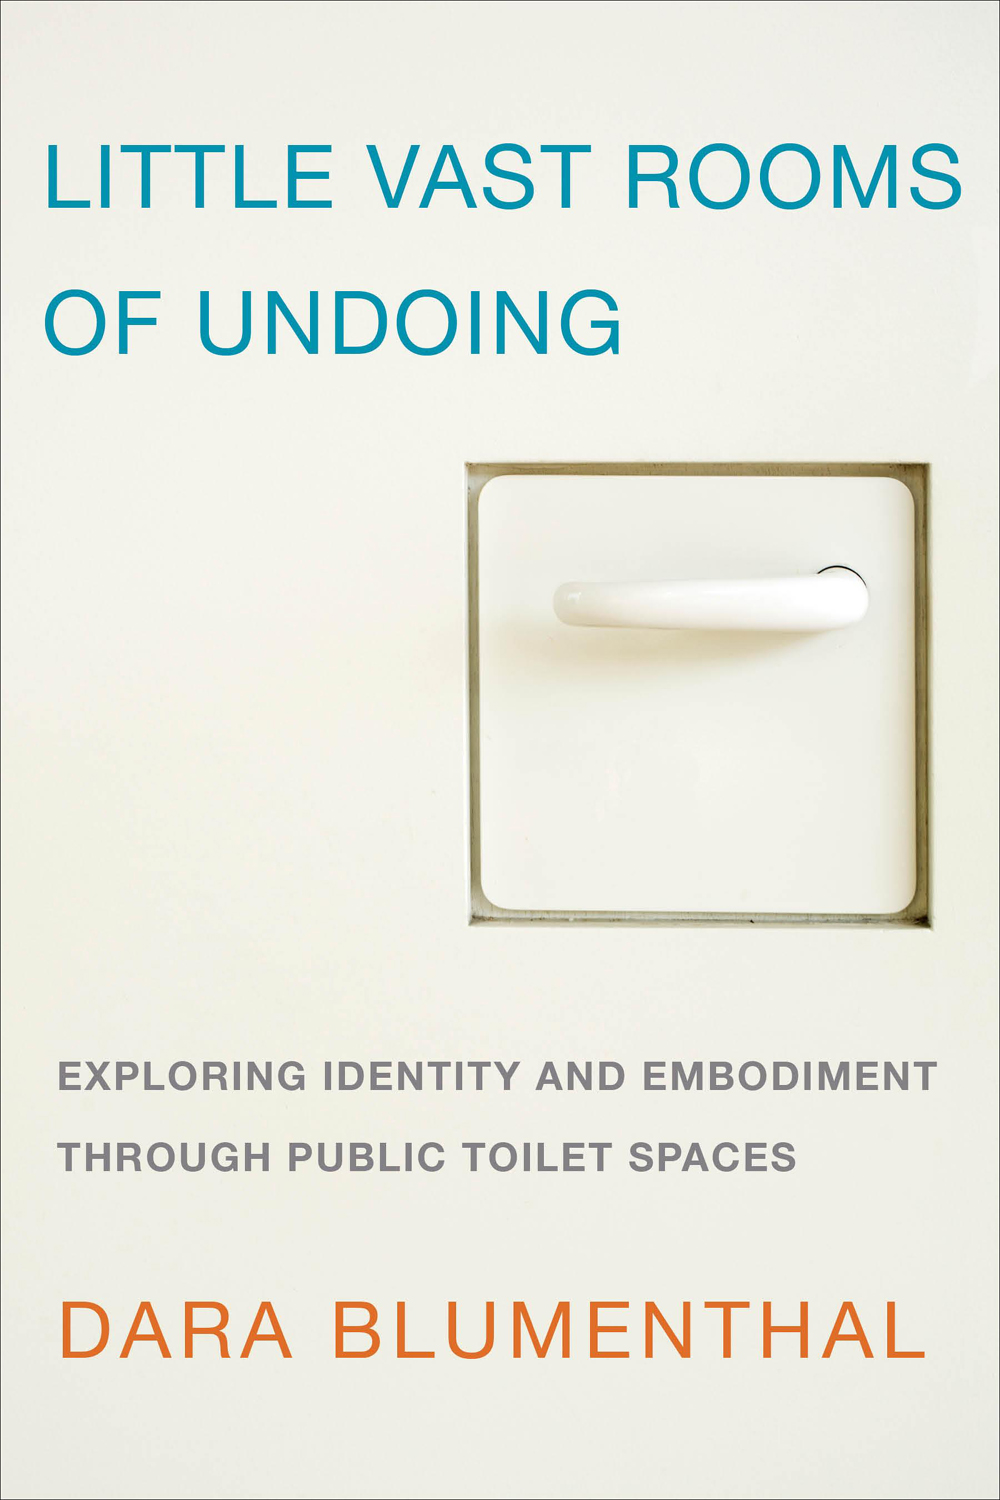 Little Vast Rooms of Undoing: Exploring Identity and Embodiment through Public Toilet Spaces